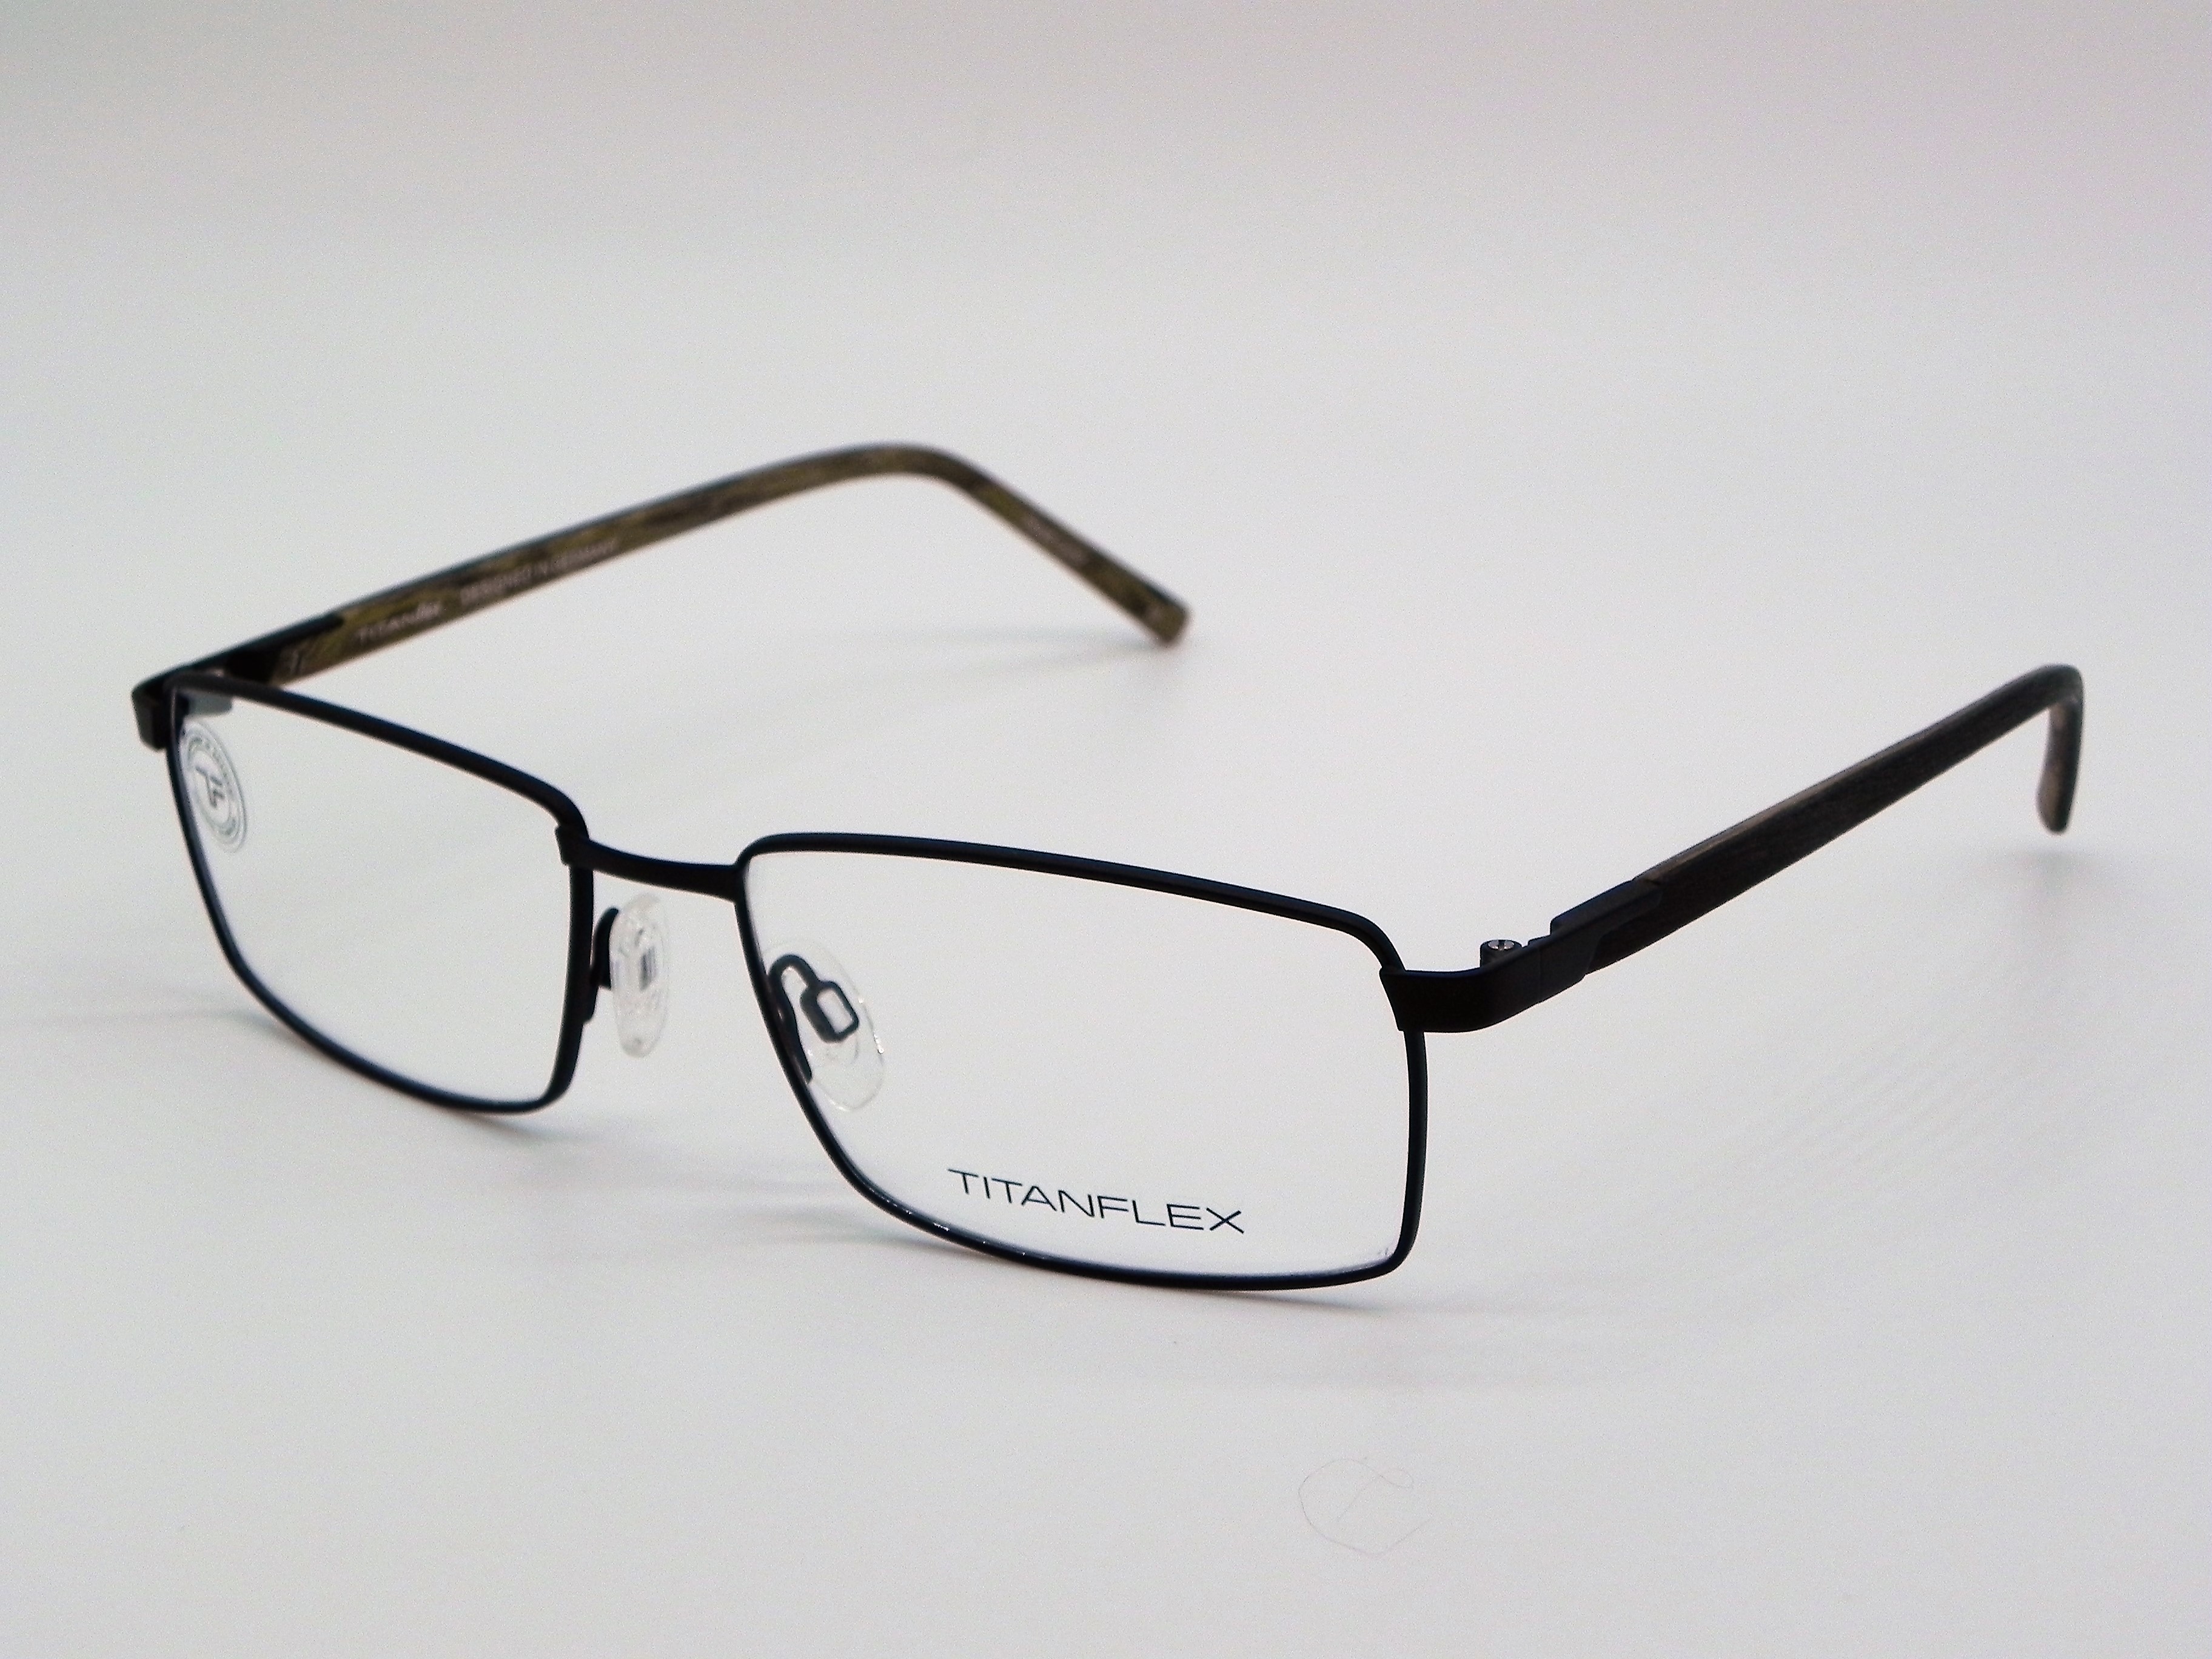 TitanFlex Glasses Monterey